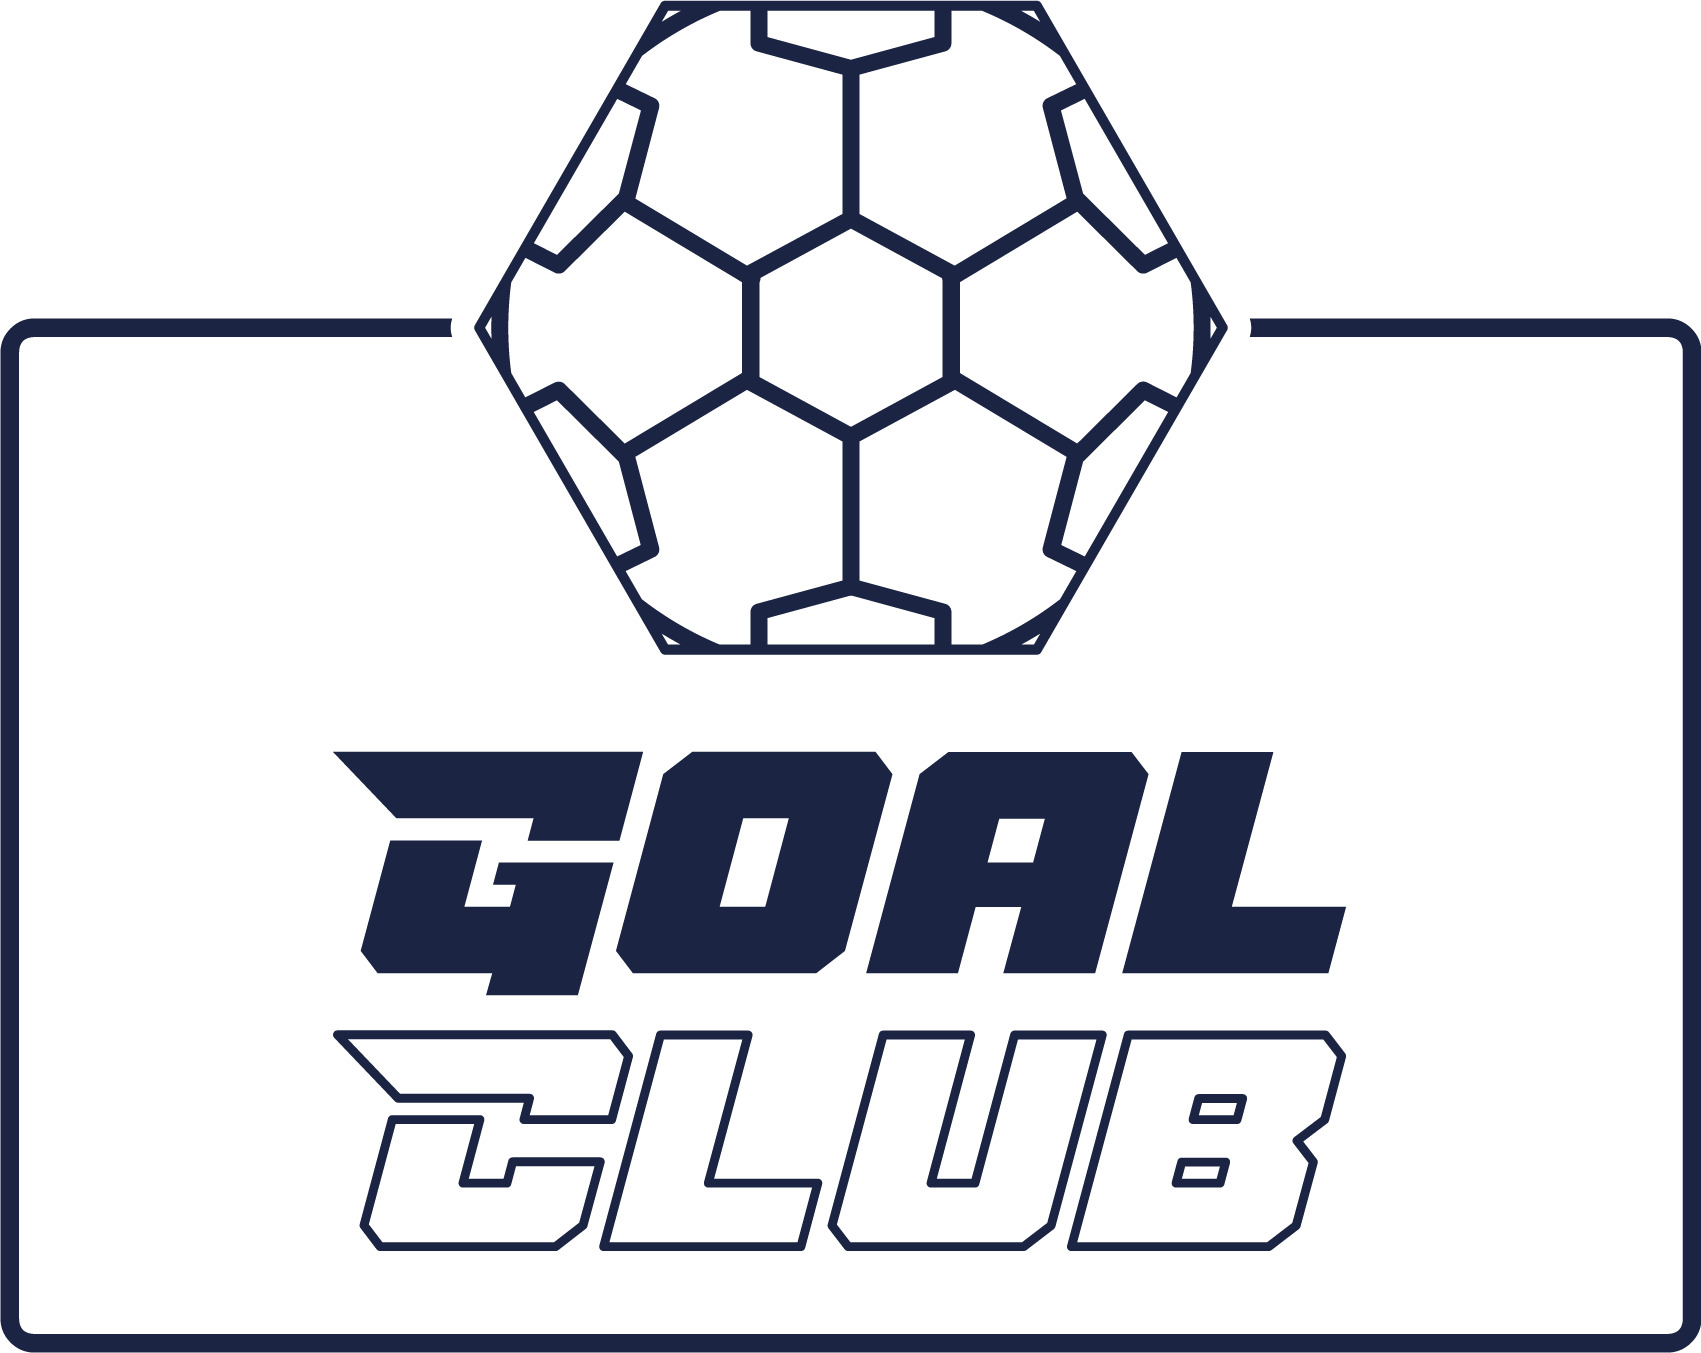 Goal_club_business-01